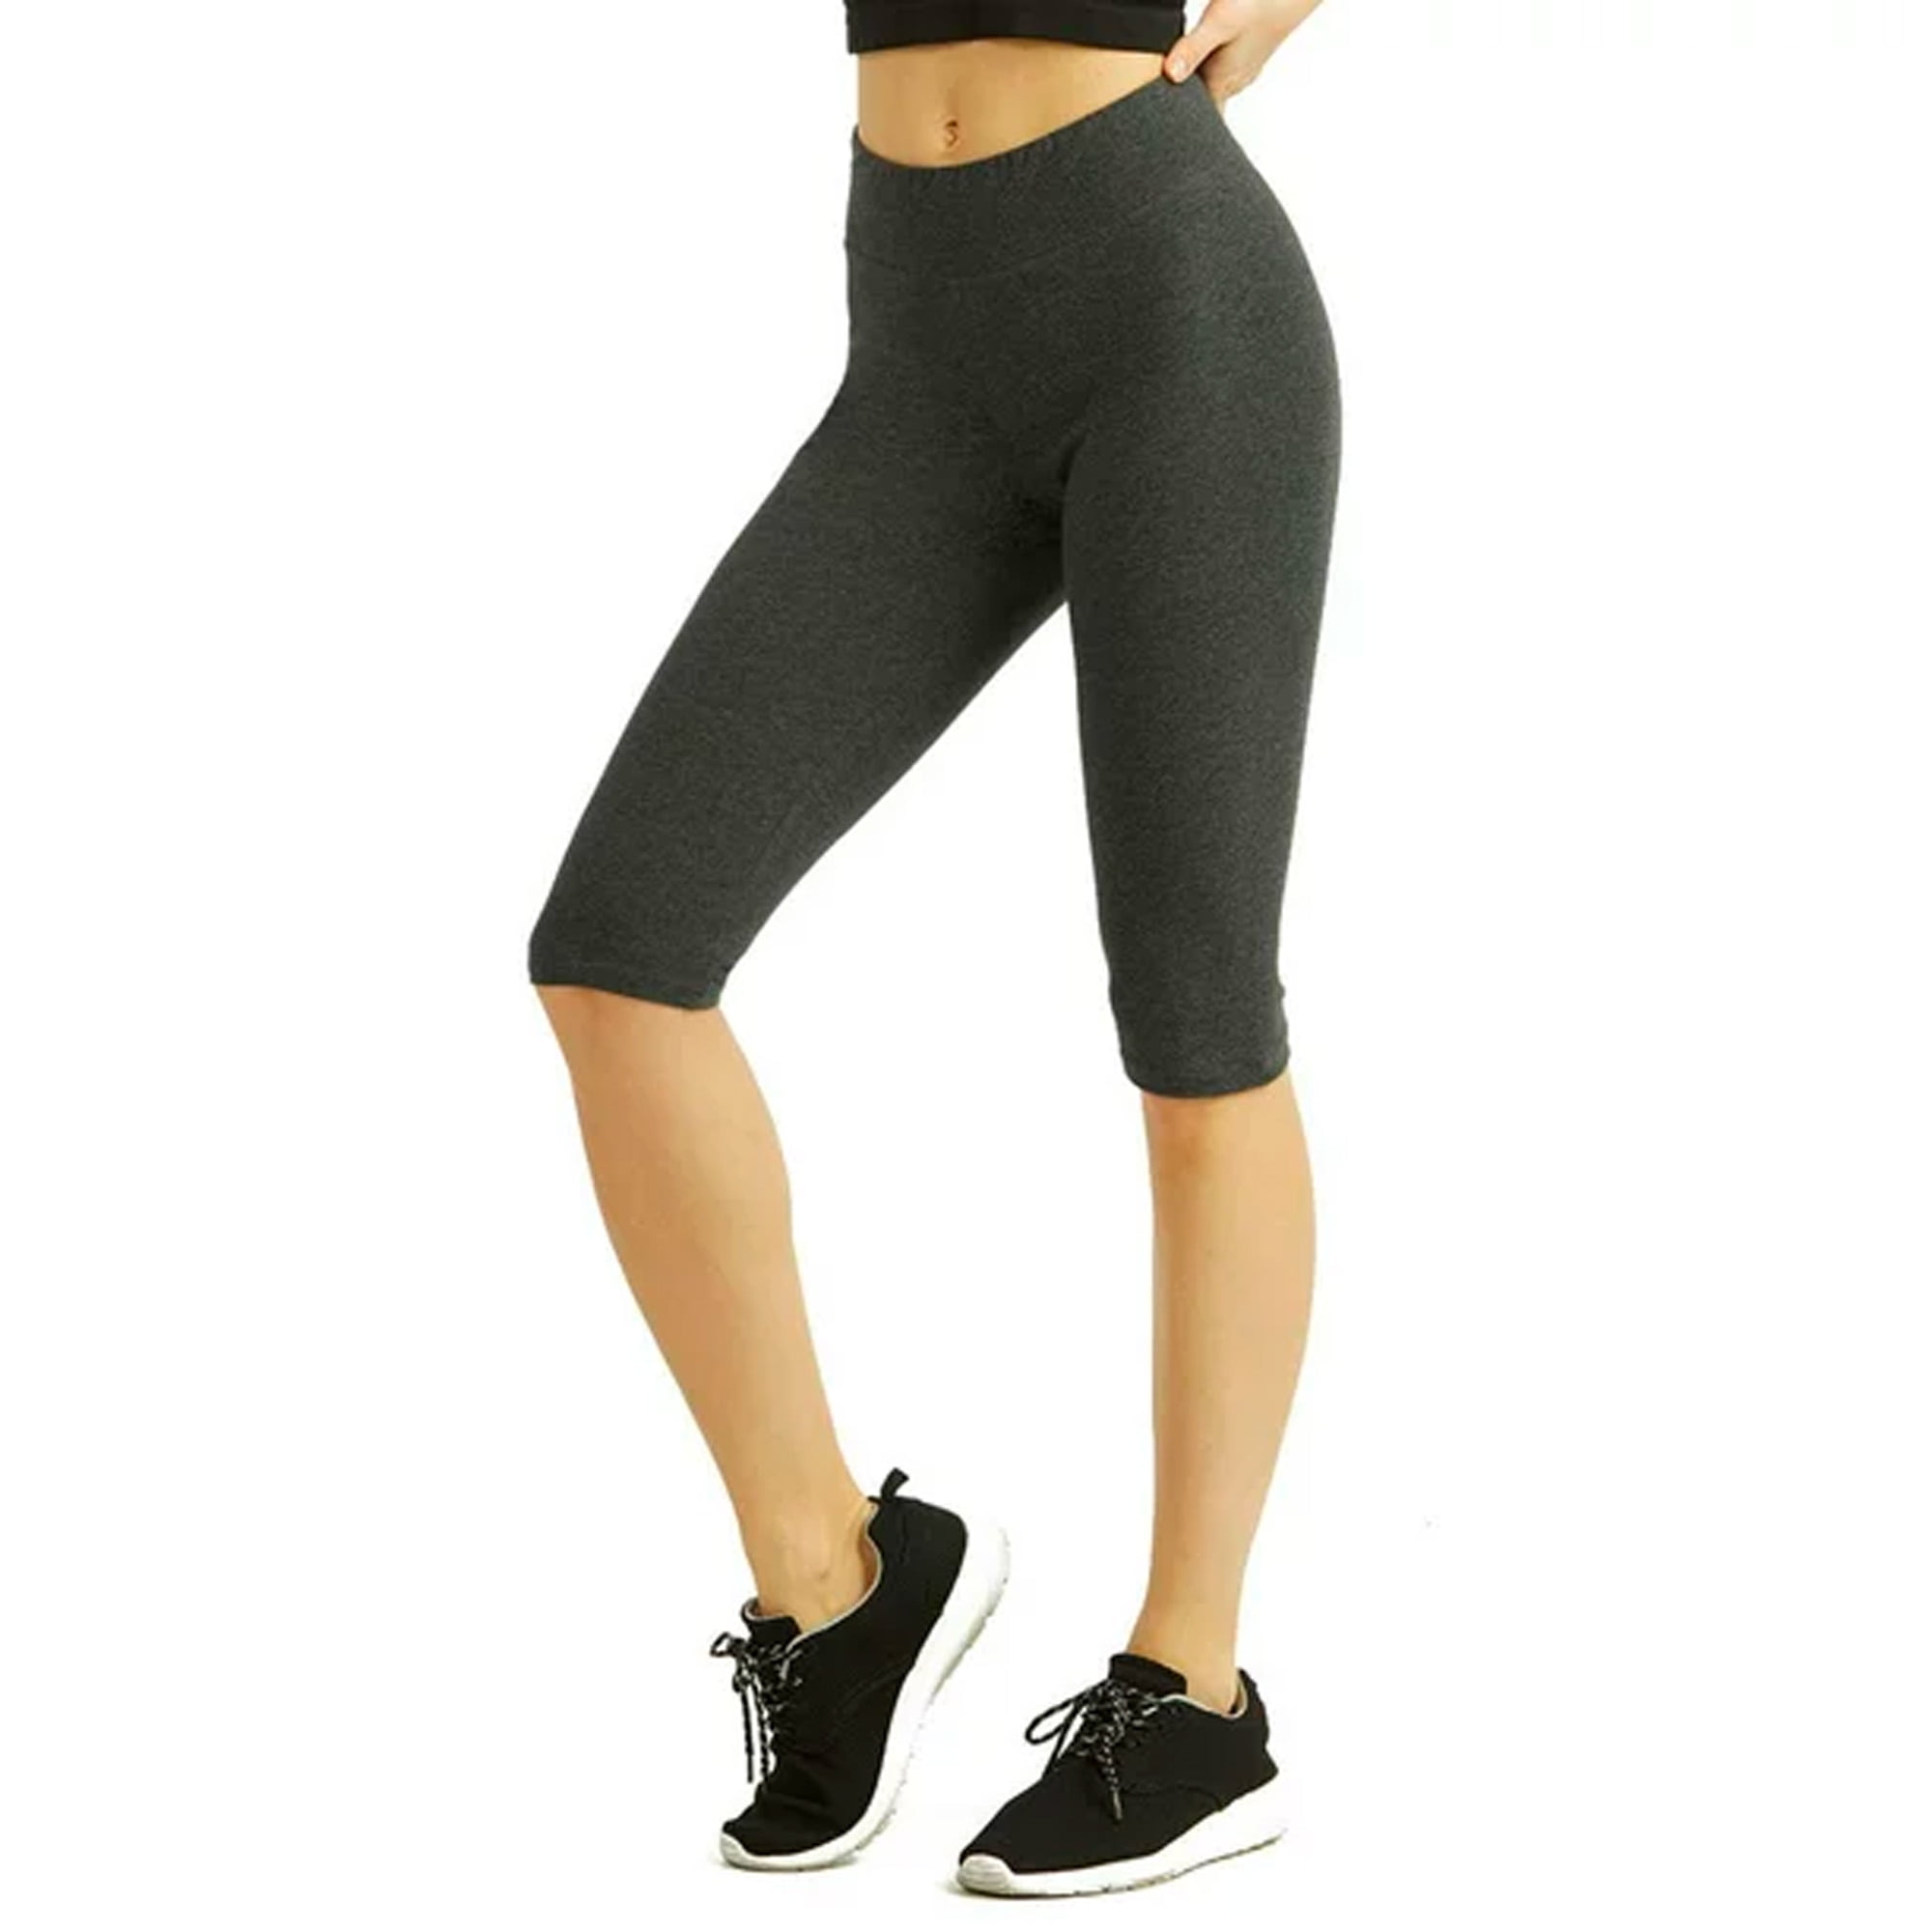 DailyWear Womens Solid Knee Length Short Yoga Cotton Leggings CHC.Gry,  Medium Charcoal Grey 